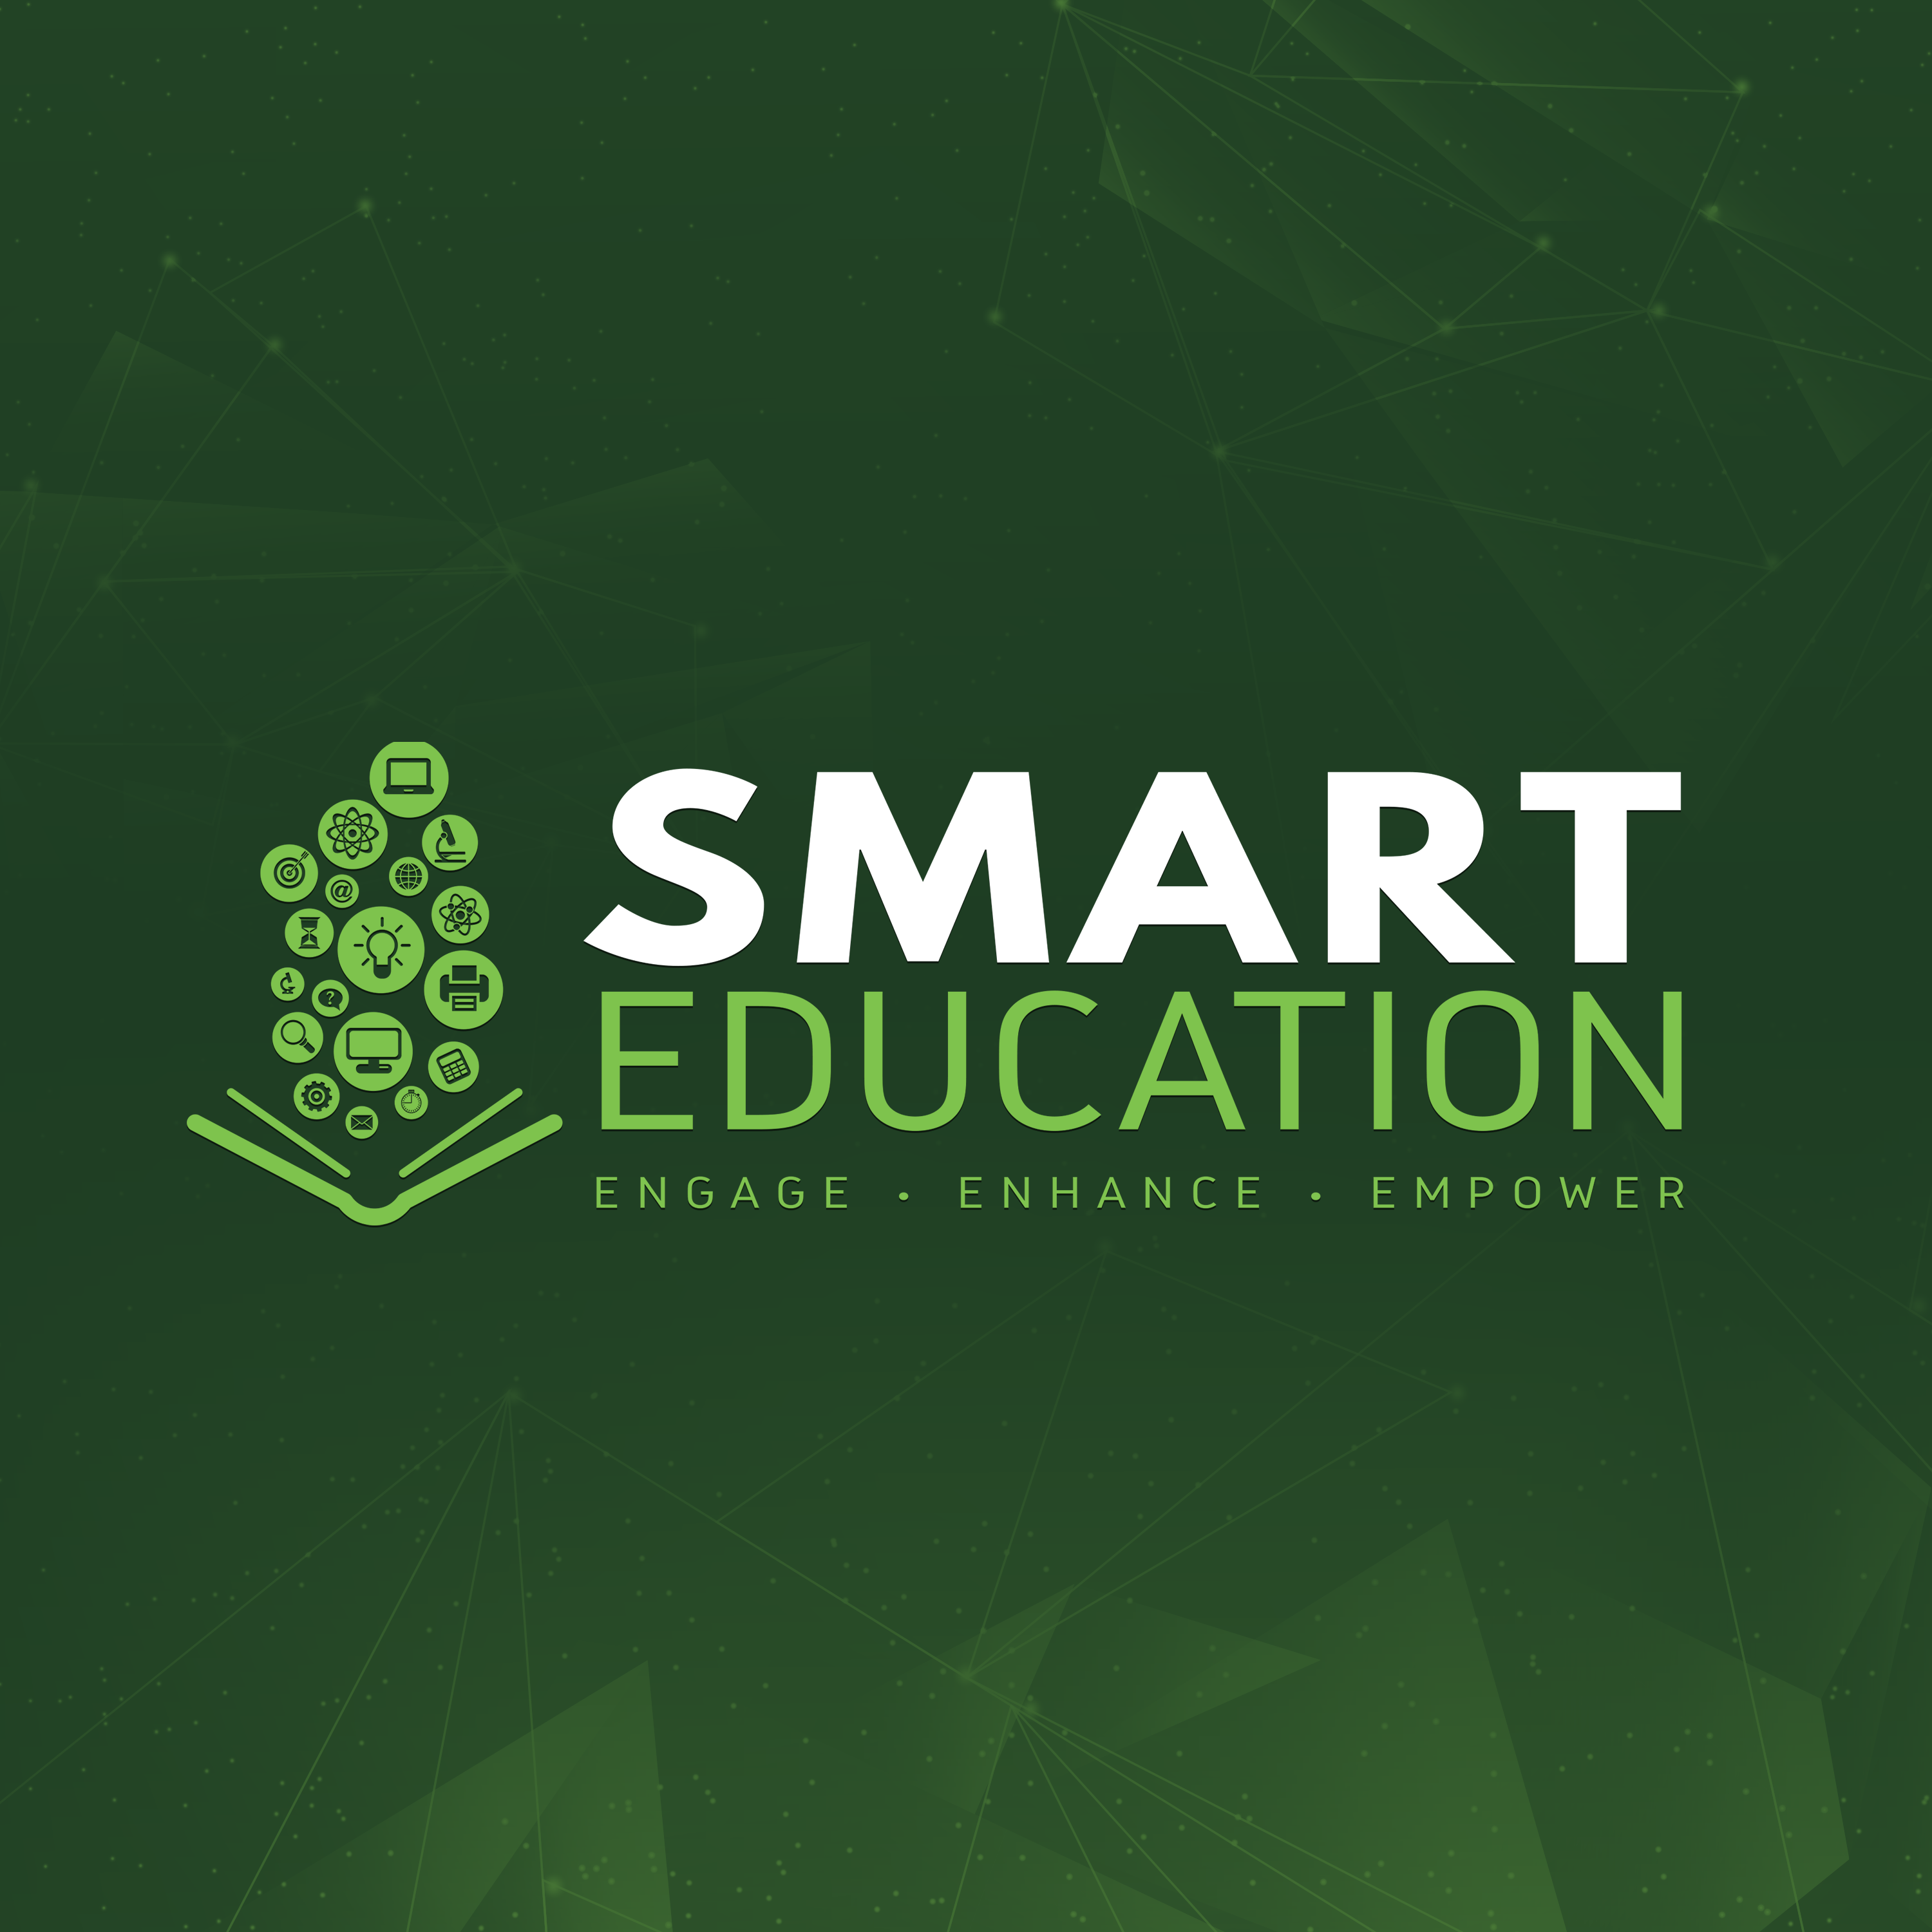 SMART EDUCATION SUMMIT 2019